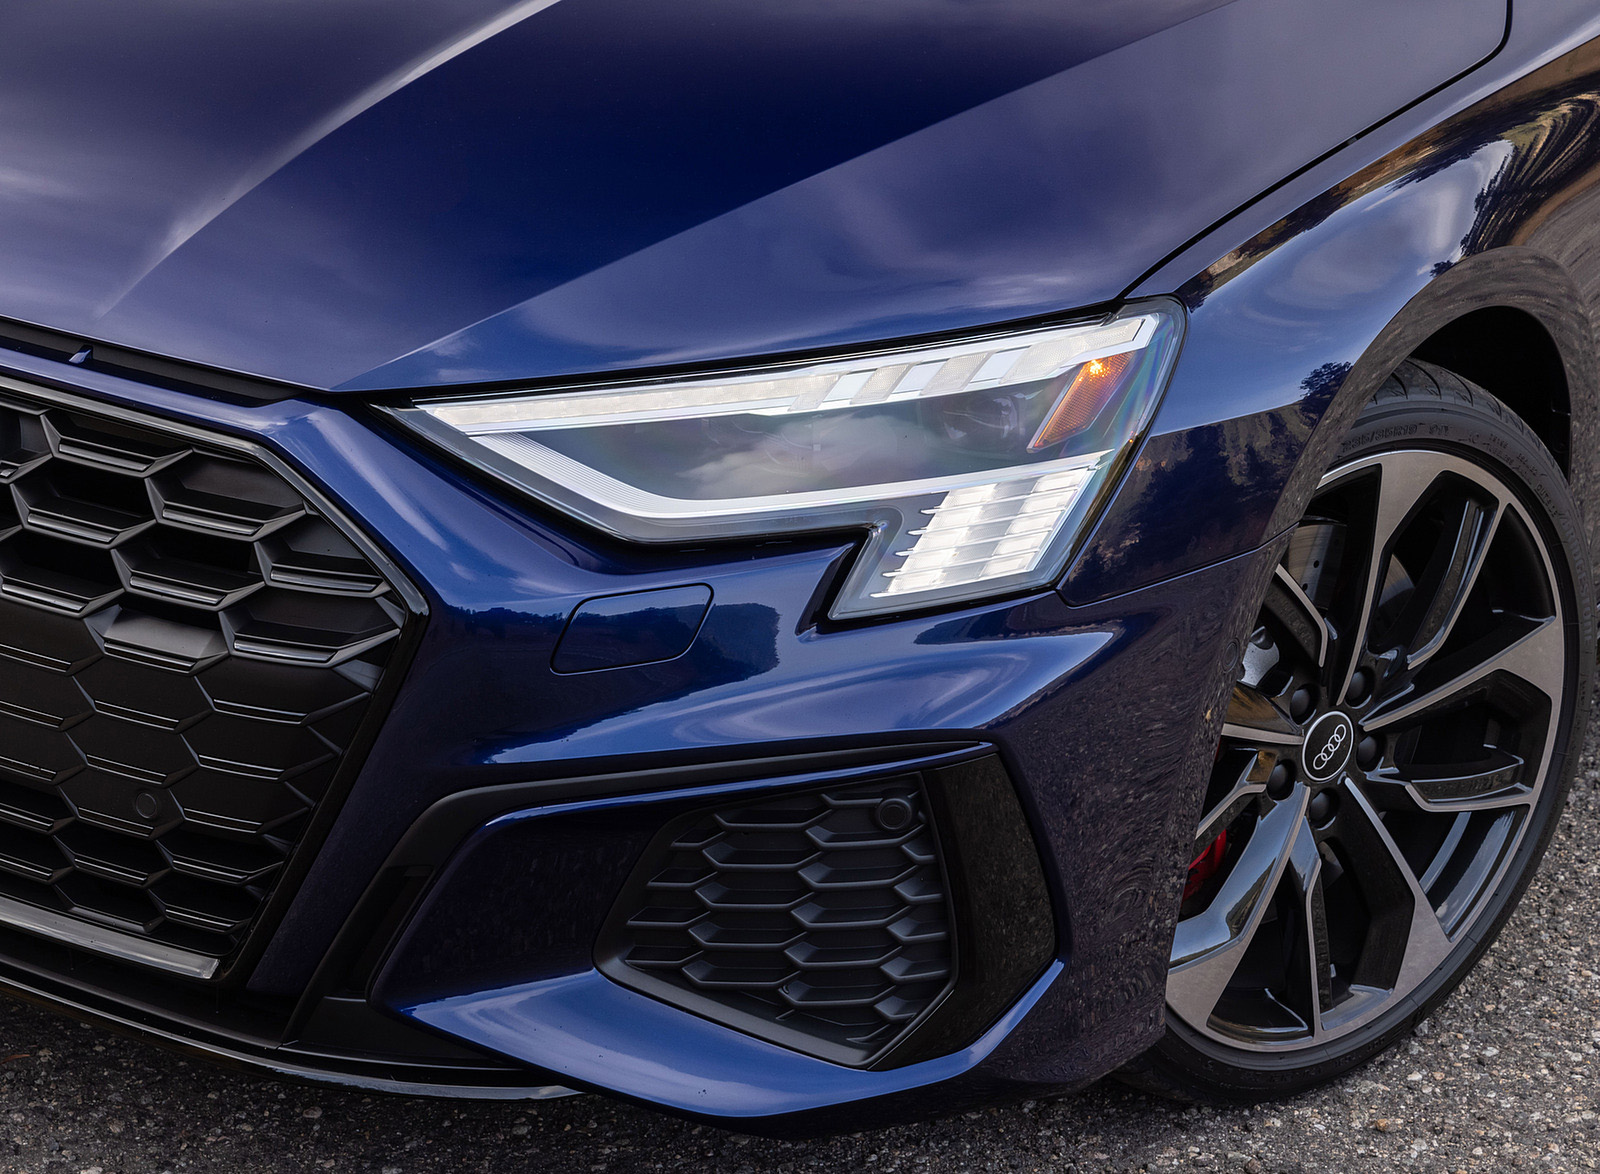 2022 Audi S3 (Color: Navarra Blue; US-Spec) Headlight Wallpapers #79 of 90